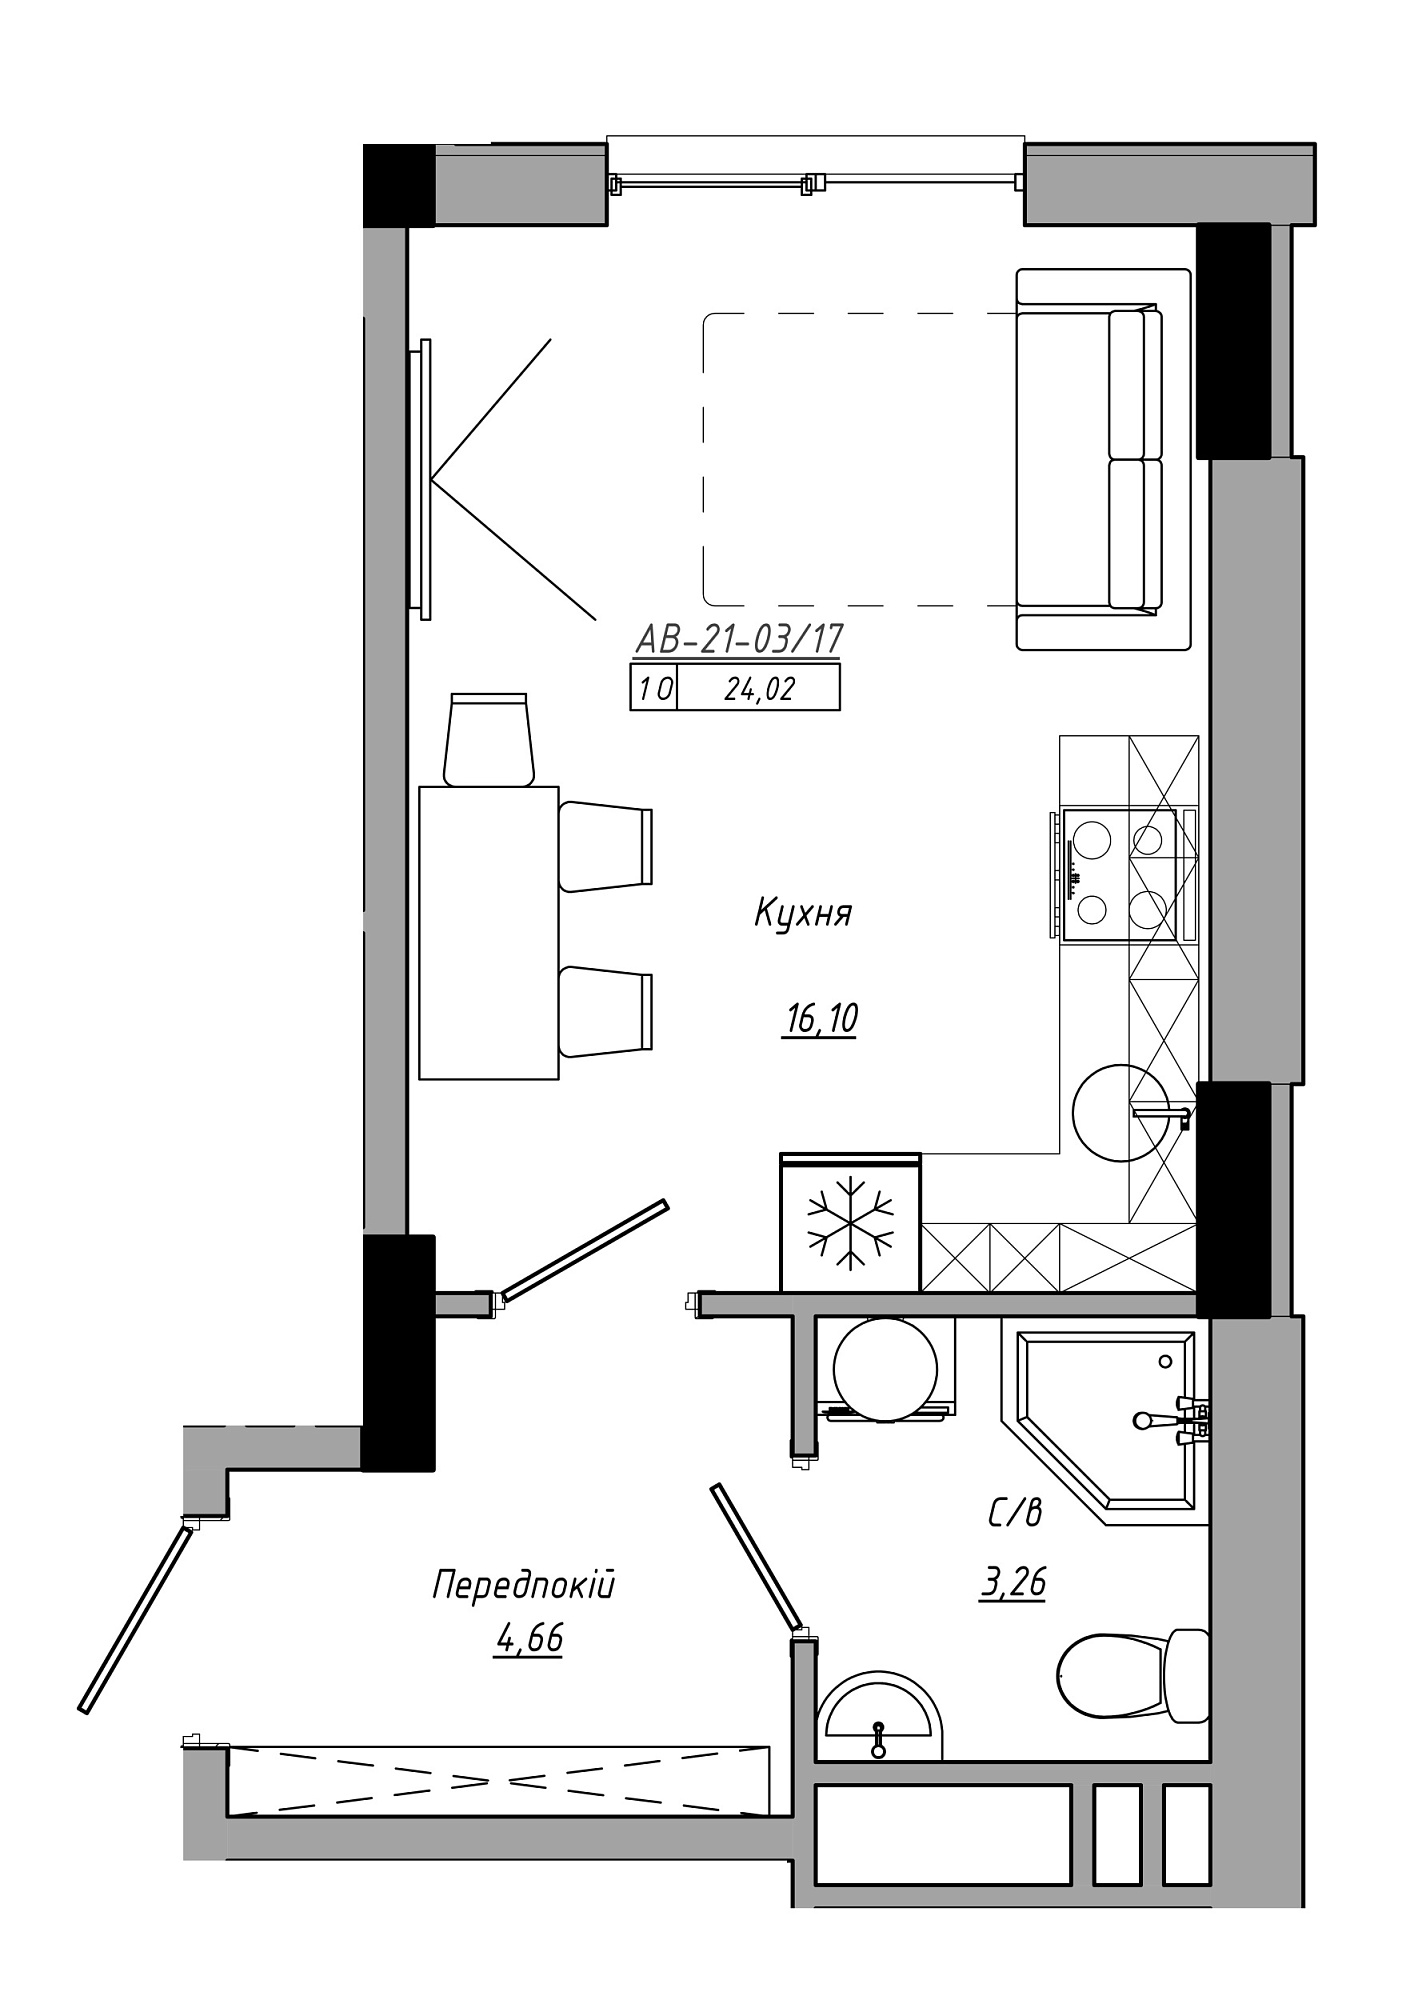 Planning Smart flats area 24.02m2, AB-21-03/00017.